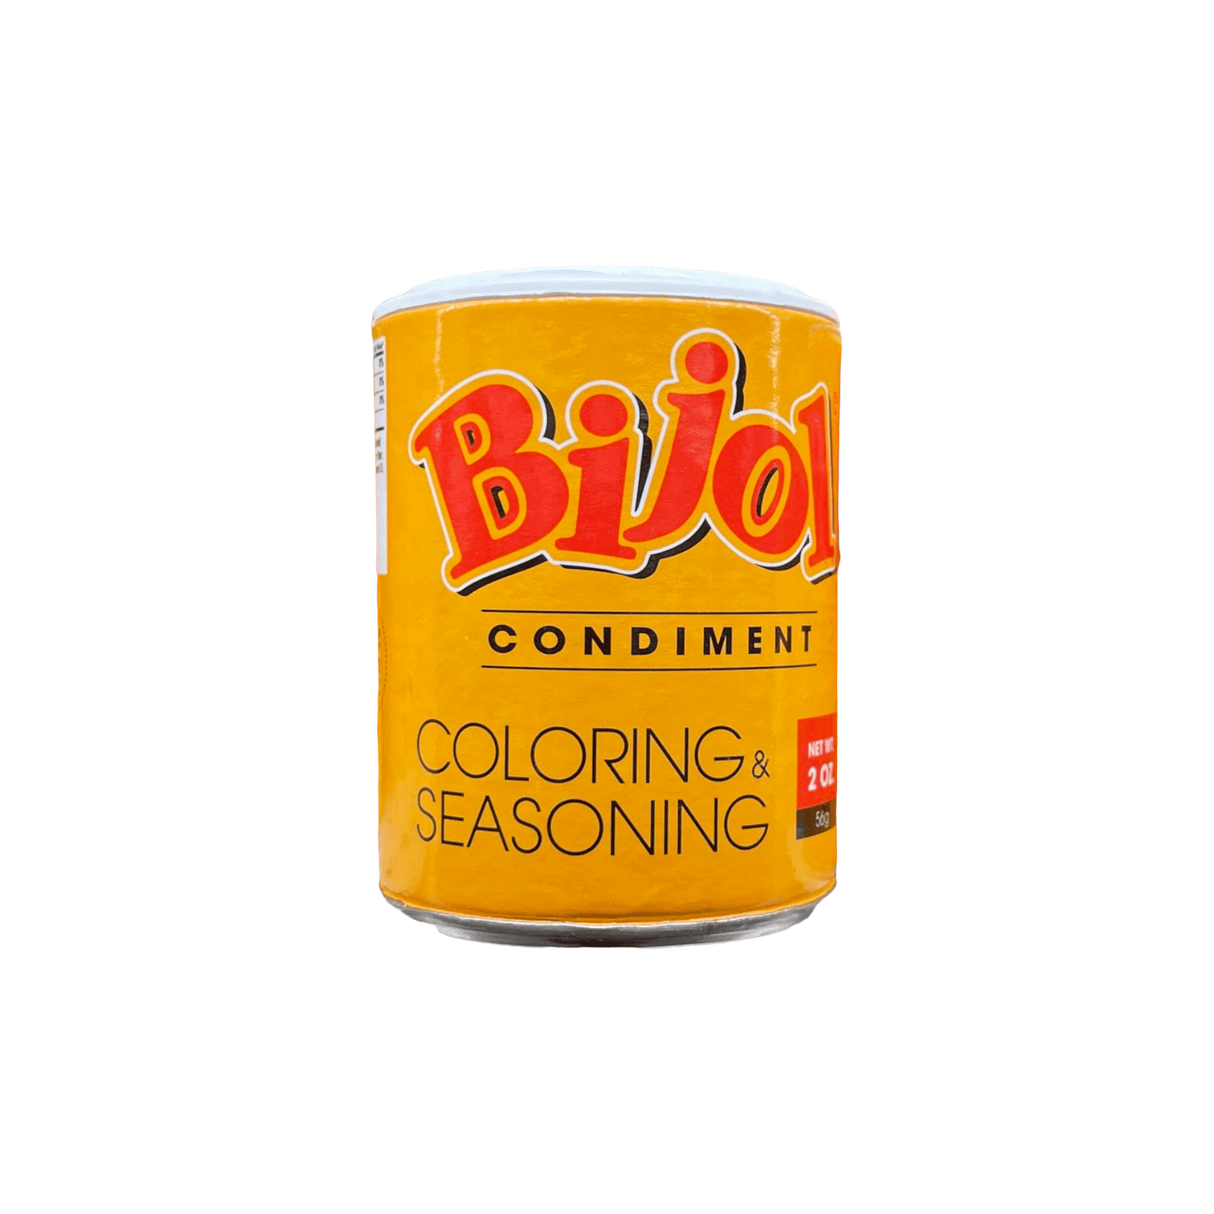 Bijol Condiment Coloring & Seasoning